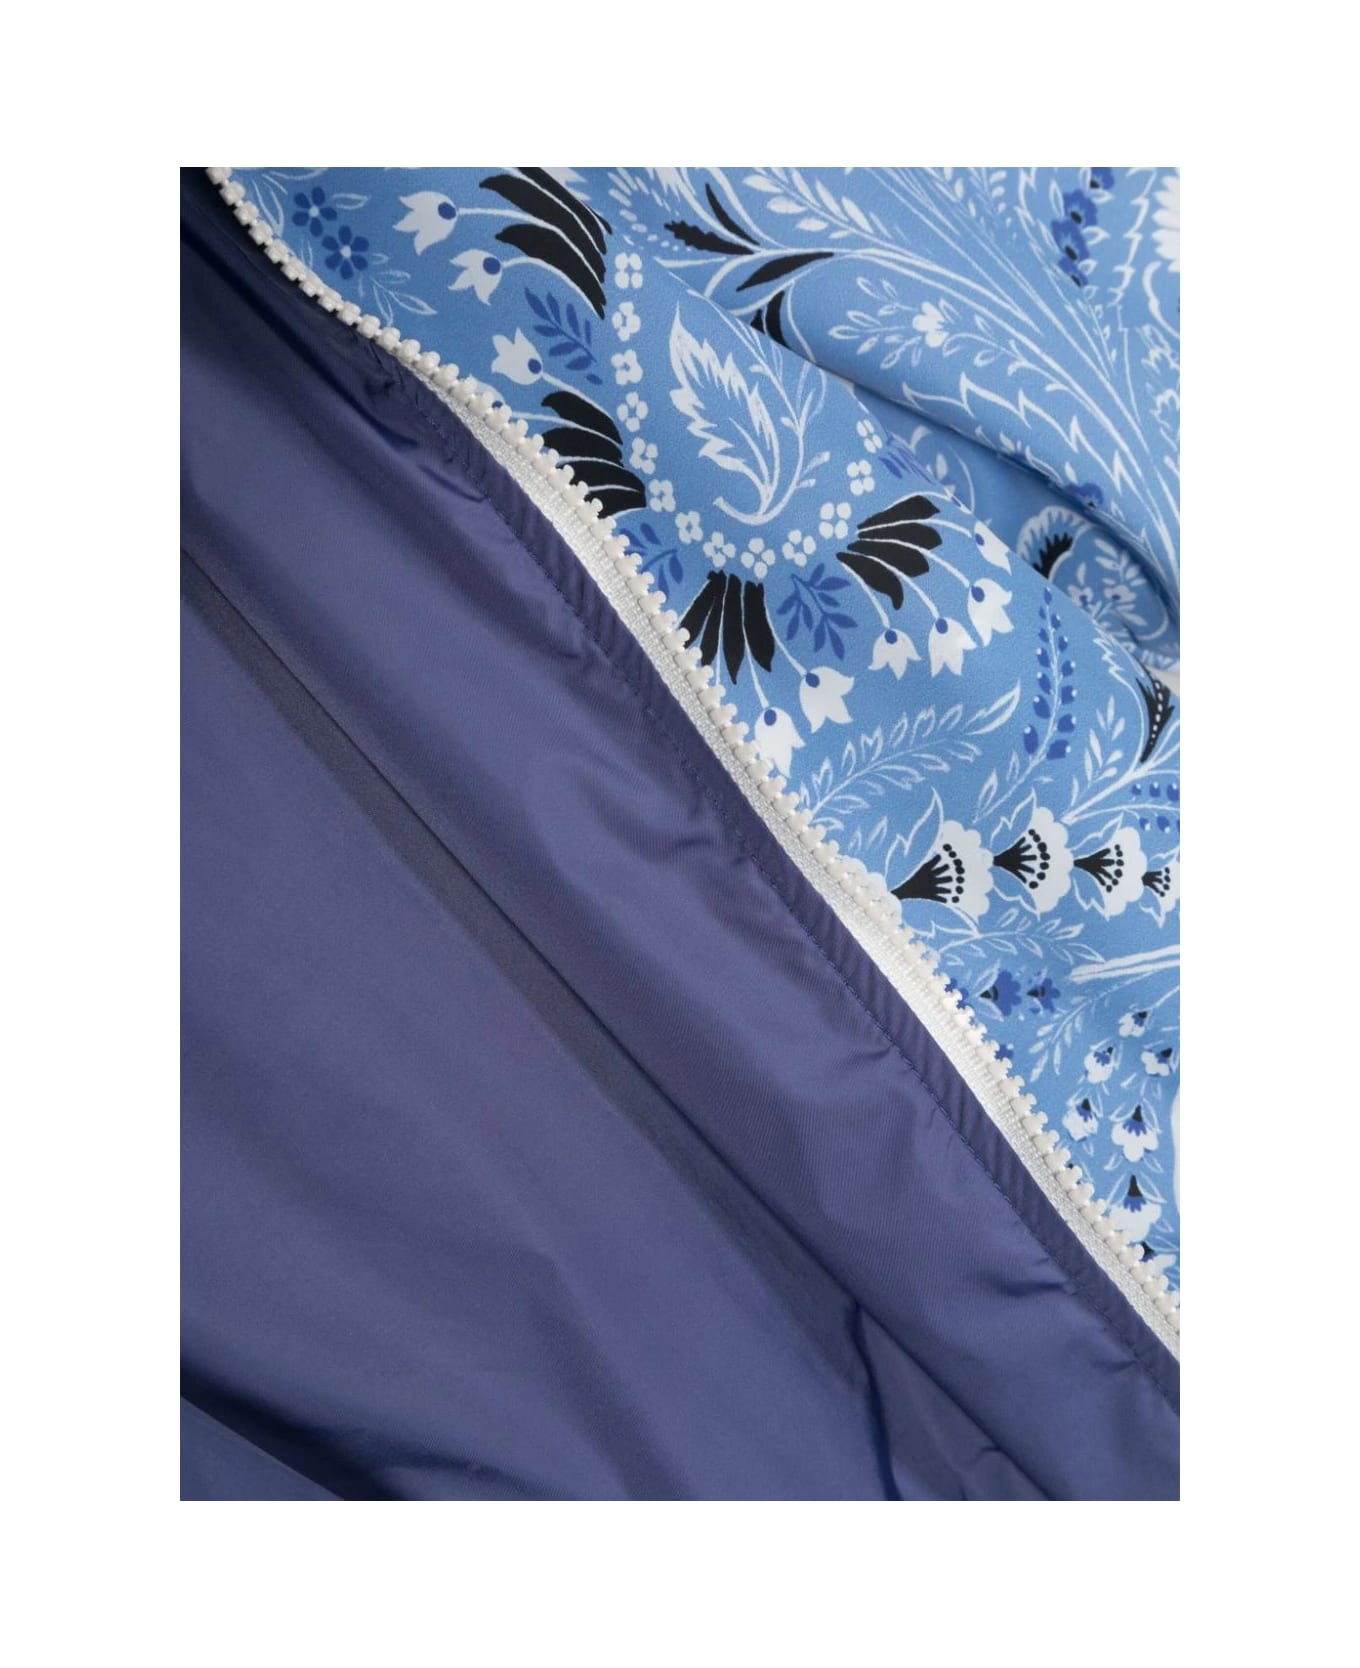 Etro Light Blue Reversible Windbreaker Jacket With Paisley Motif - Celeste/avorio